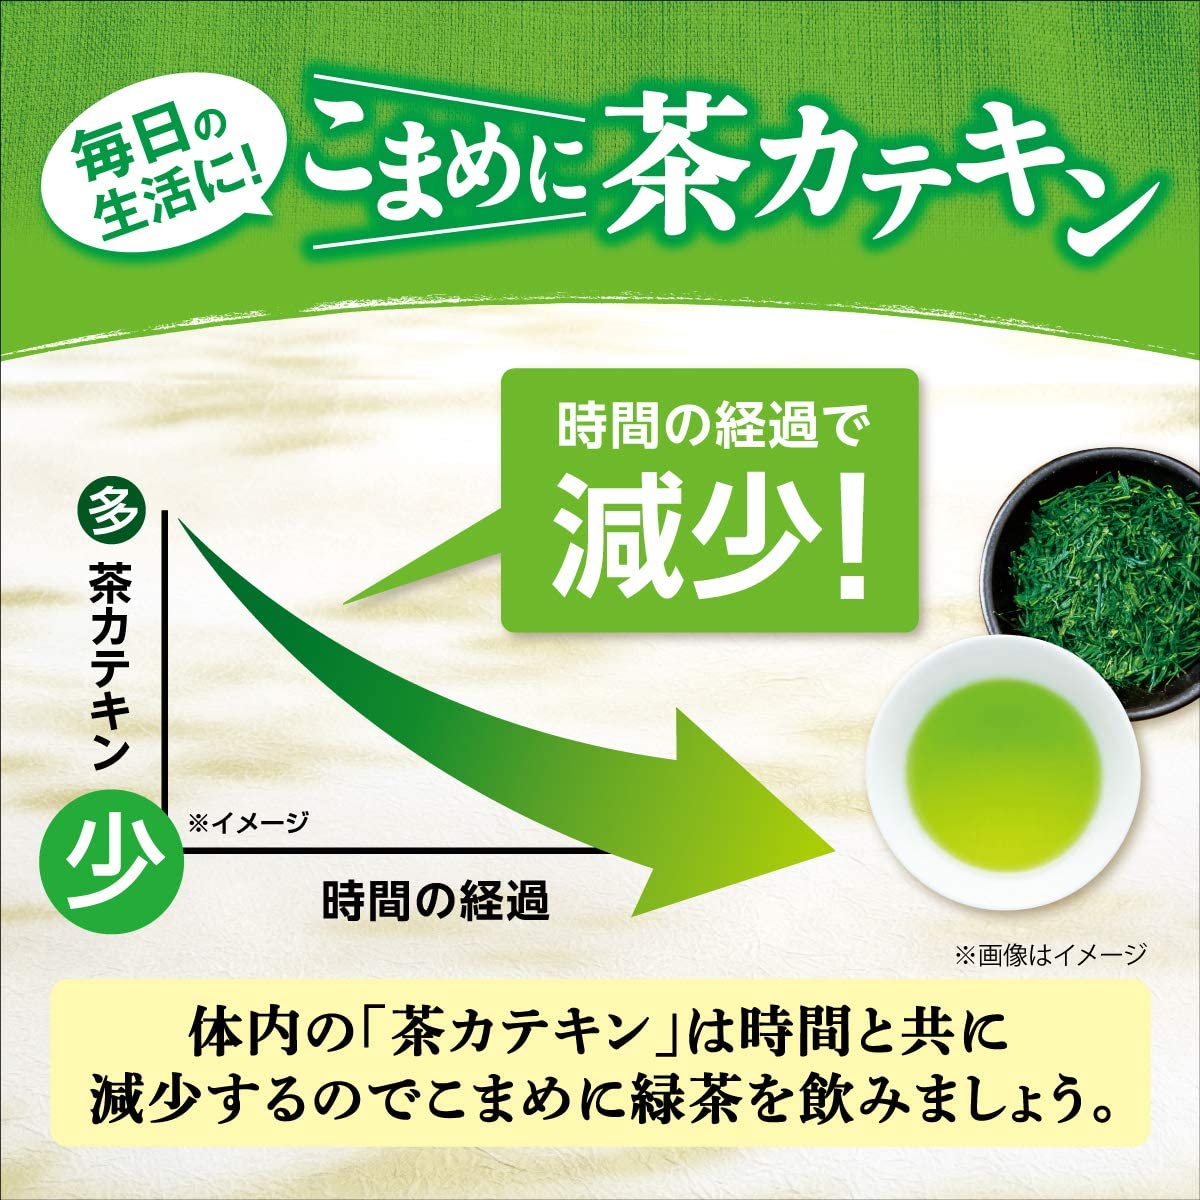 Itoen home size green tea 150g